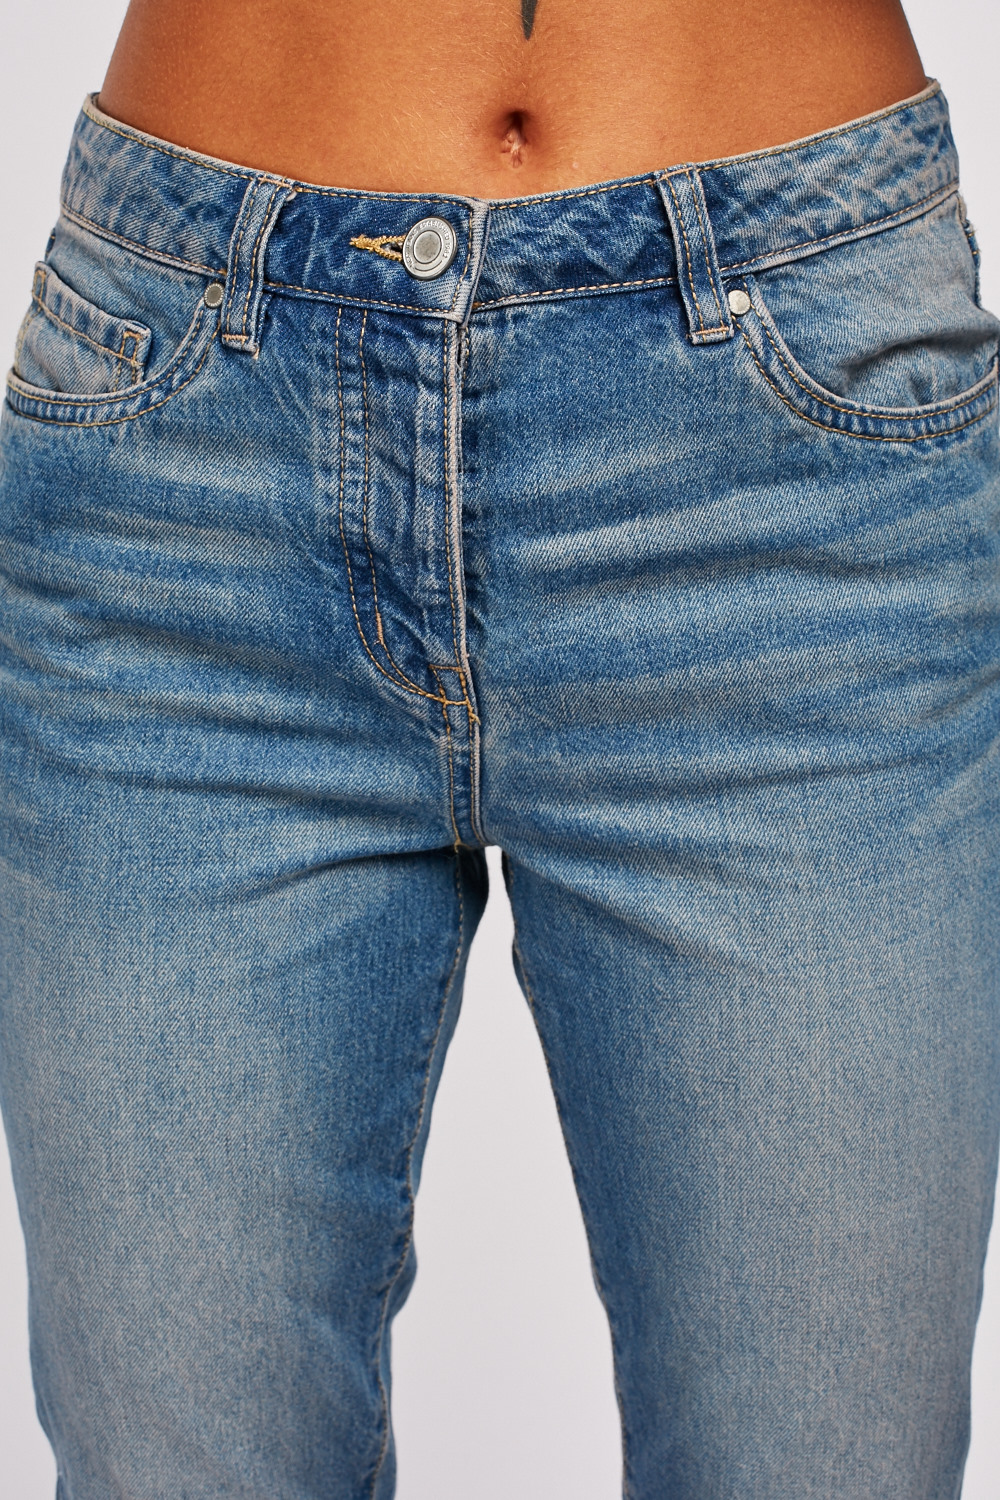 Boyfit Denim Blue Jeans - Just $6